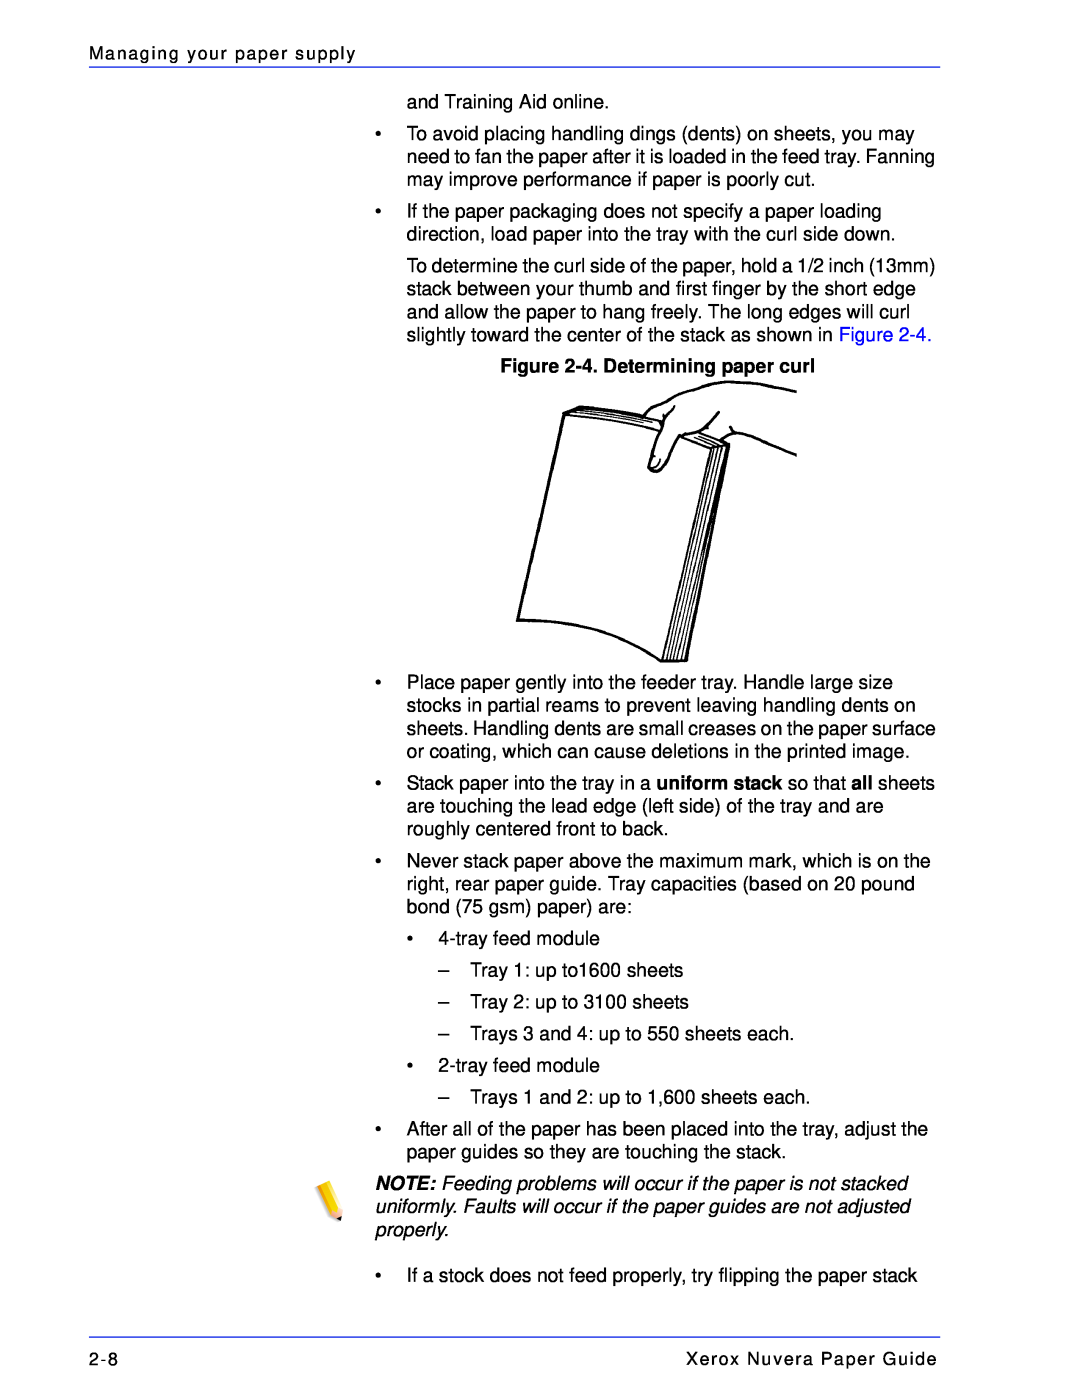 Xerox 701P28020 manual 4. Determining paper curl 